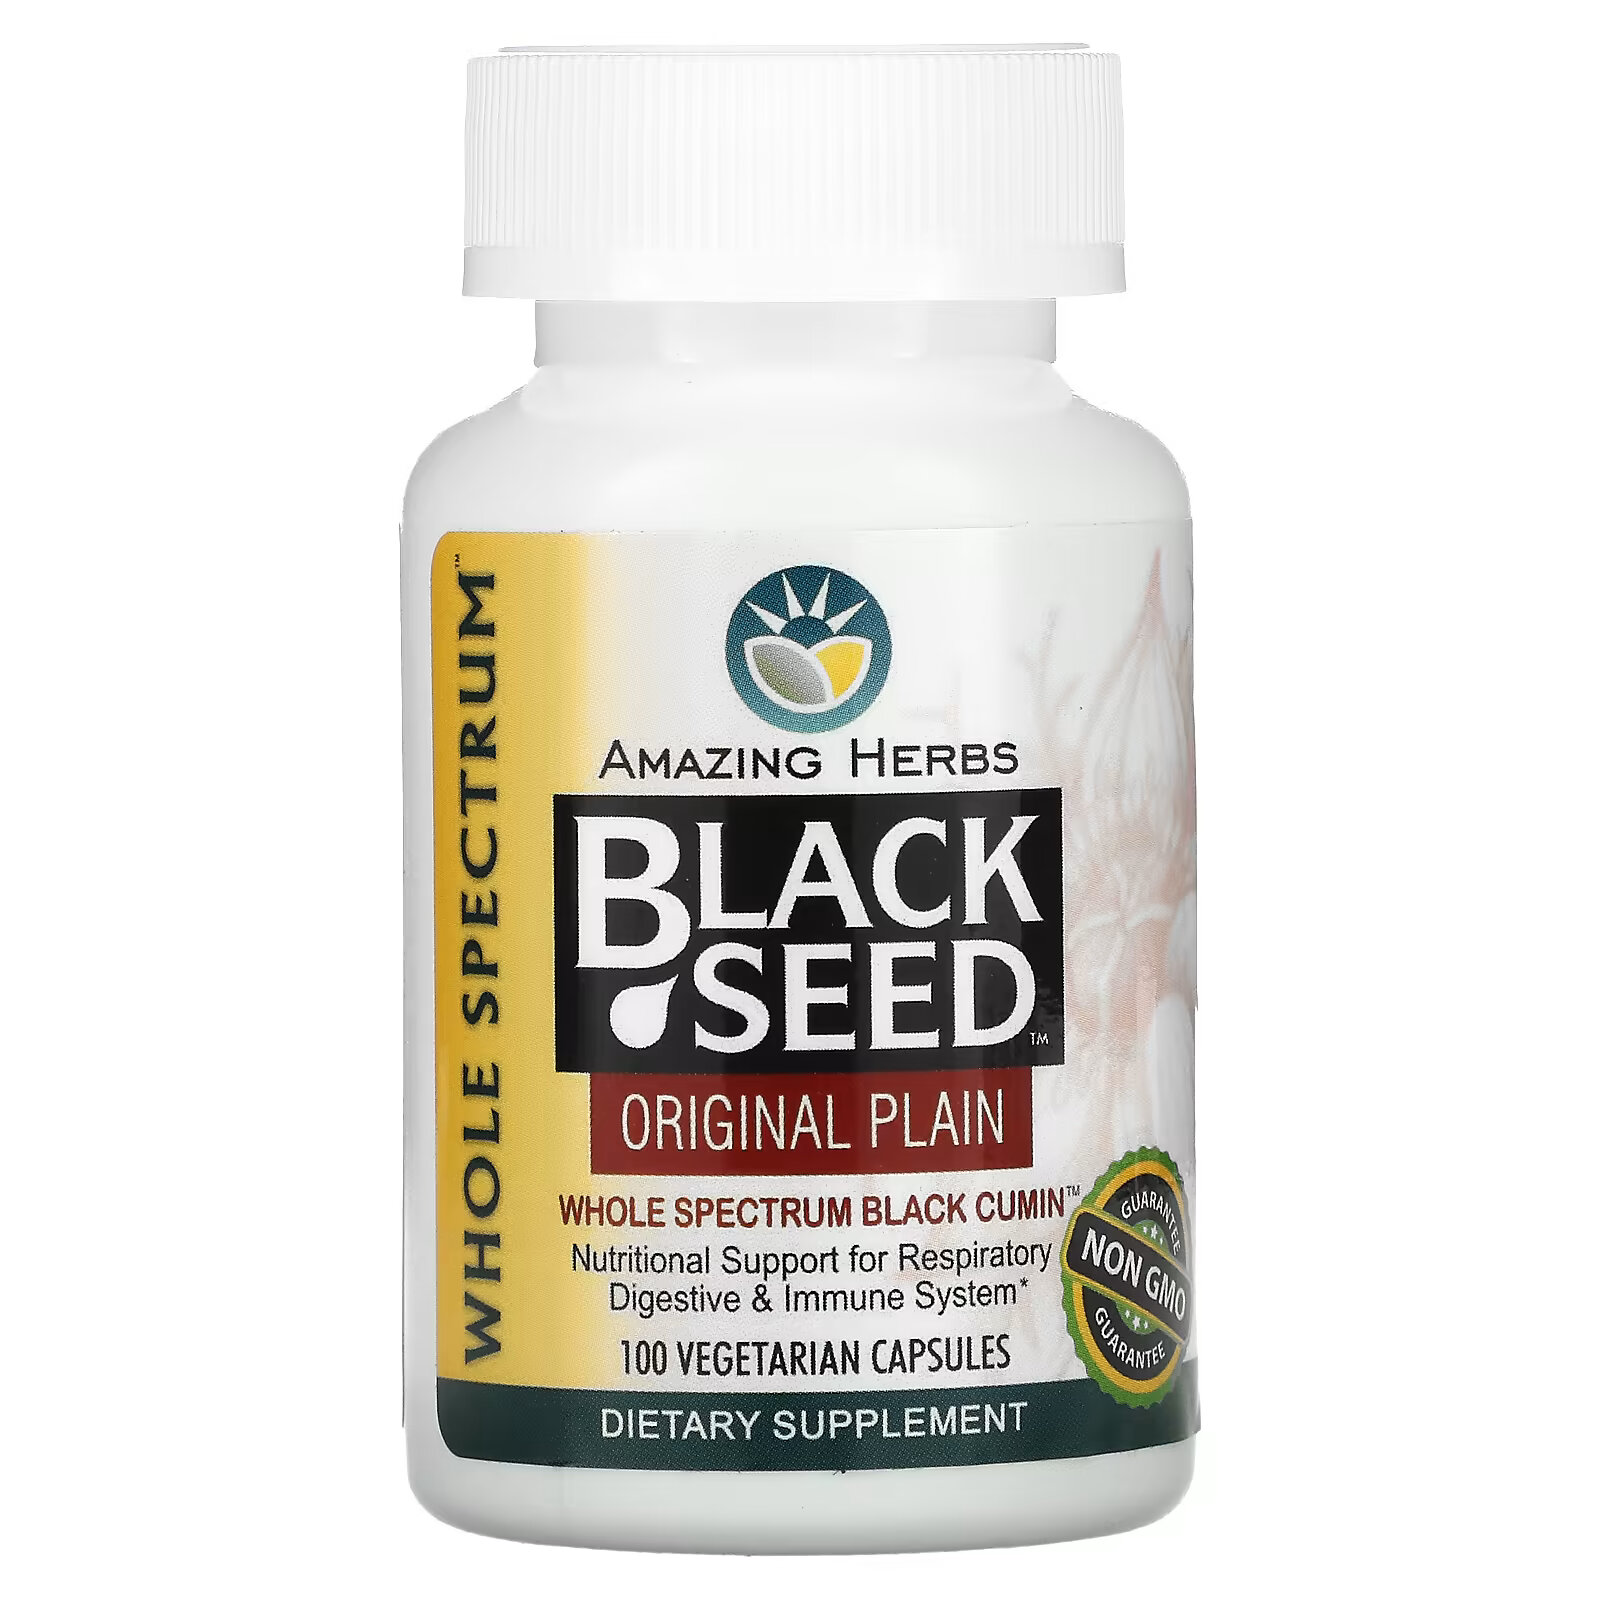 amazing herbs black seed original plain 100 вегетарианских капсул Amazing Herbs, Black Seed, Original Plain, 100 вегетарианских капсул